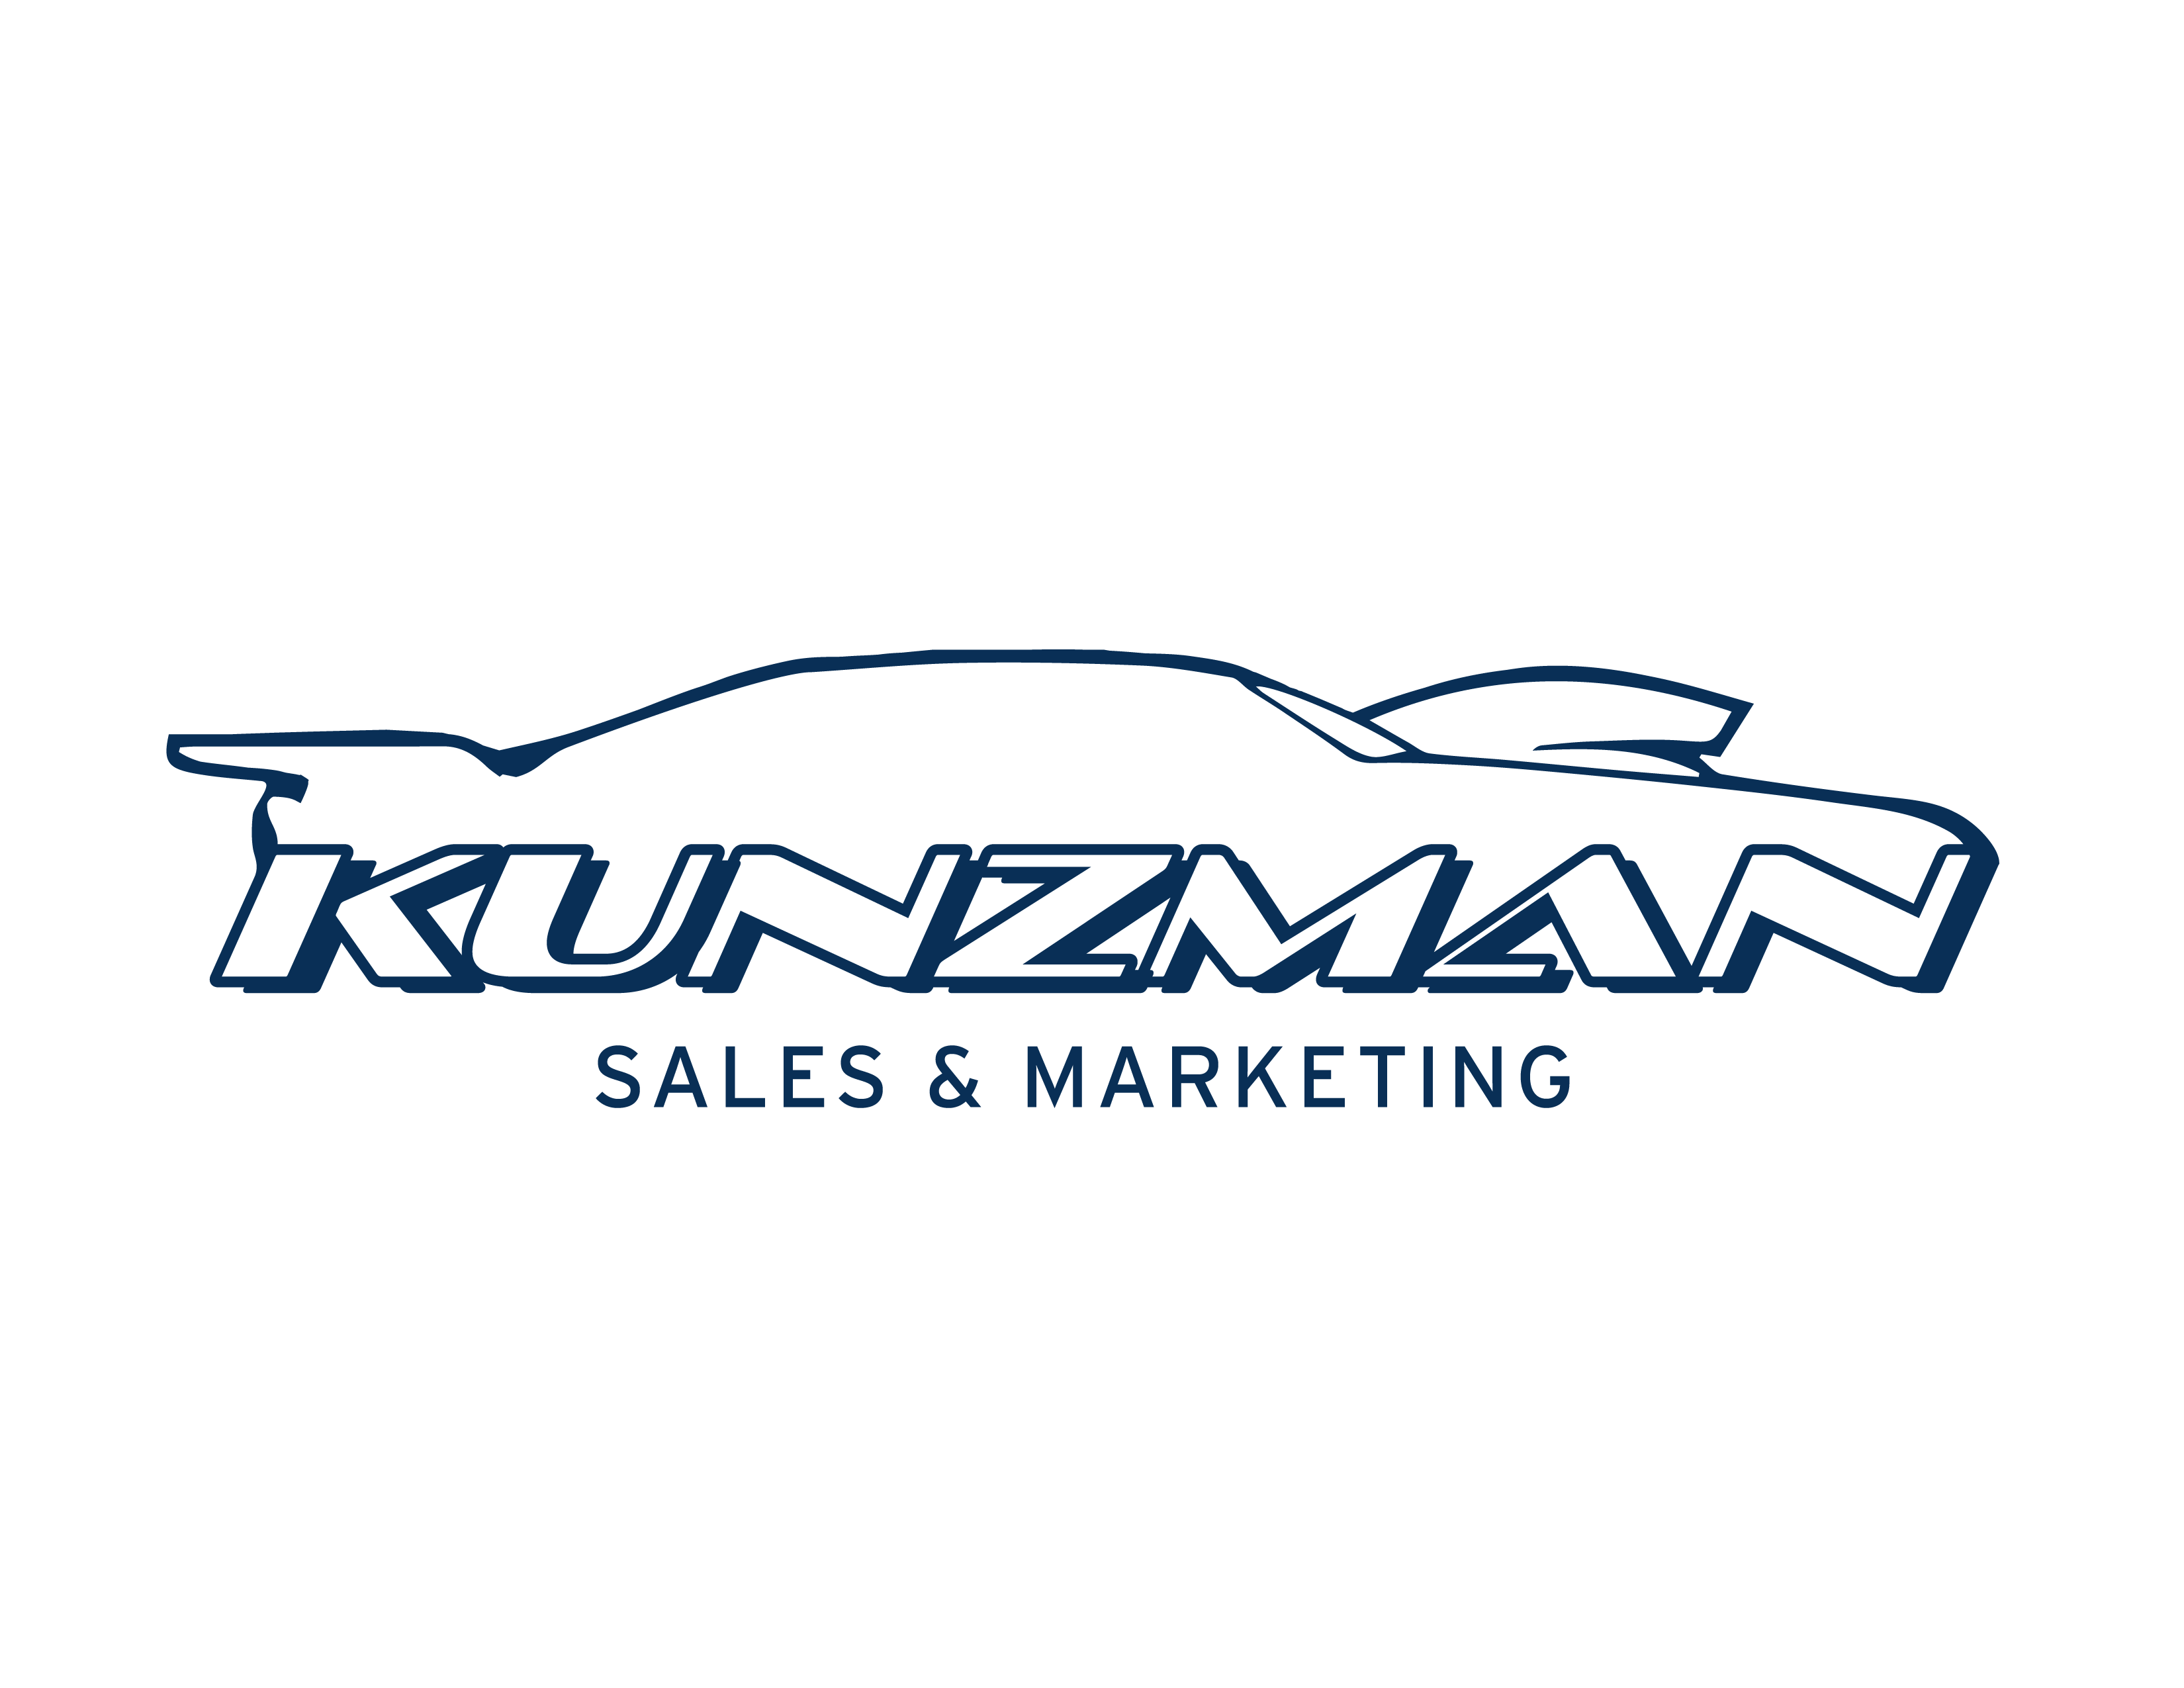 Client of the midnight oil group - Kunzman & Associates